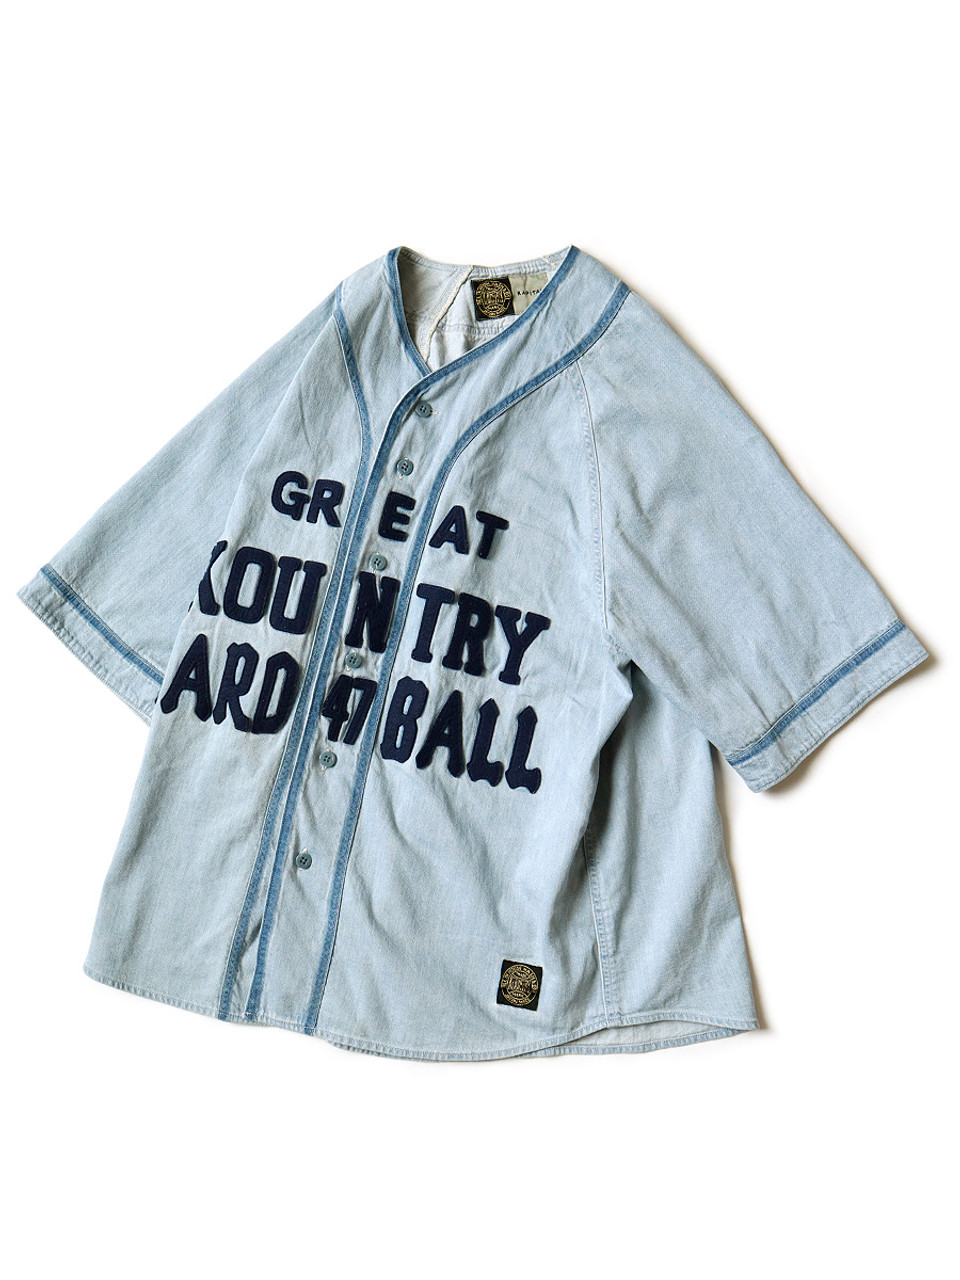 8Oz Denim GREAT KOUNTRY Baseball Shirt KR2208SS01